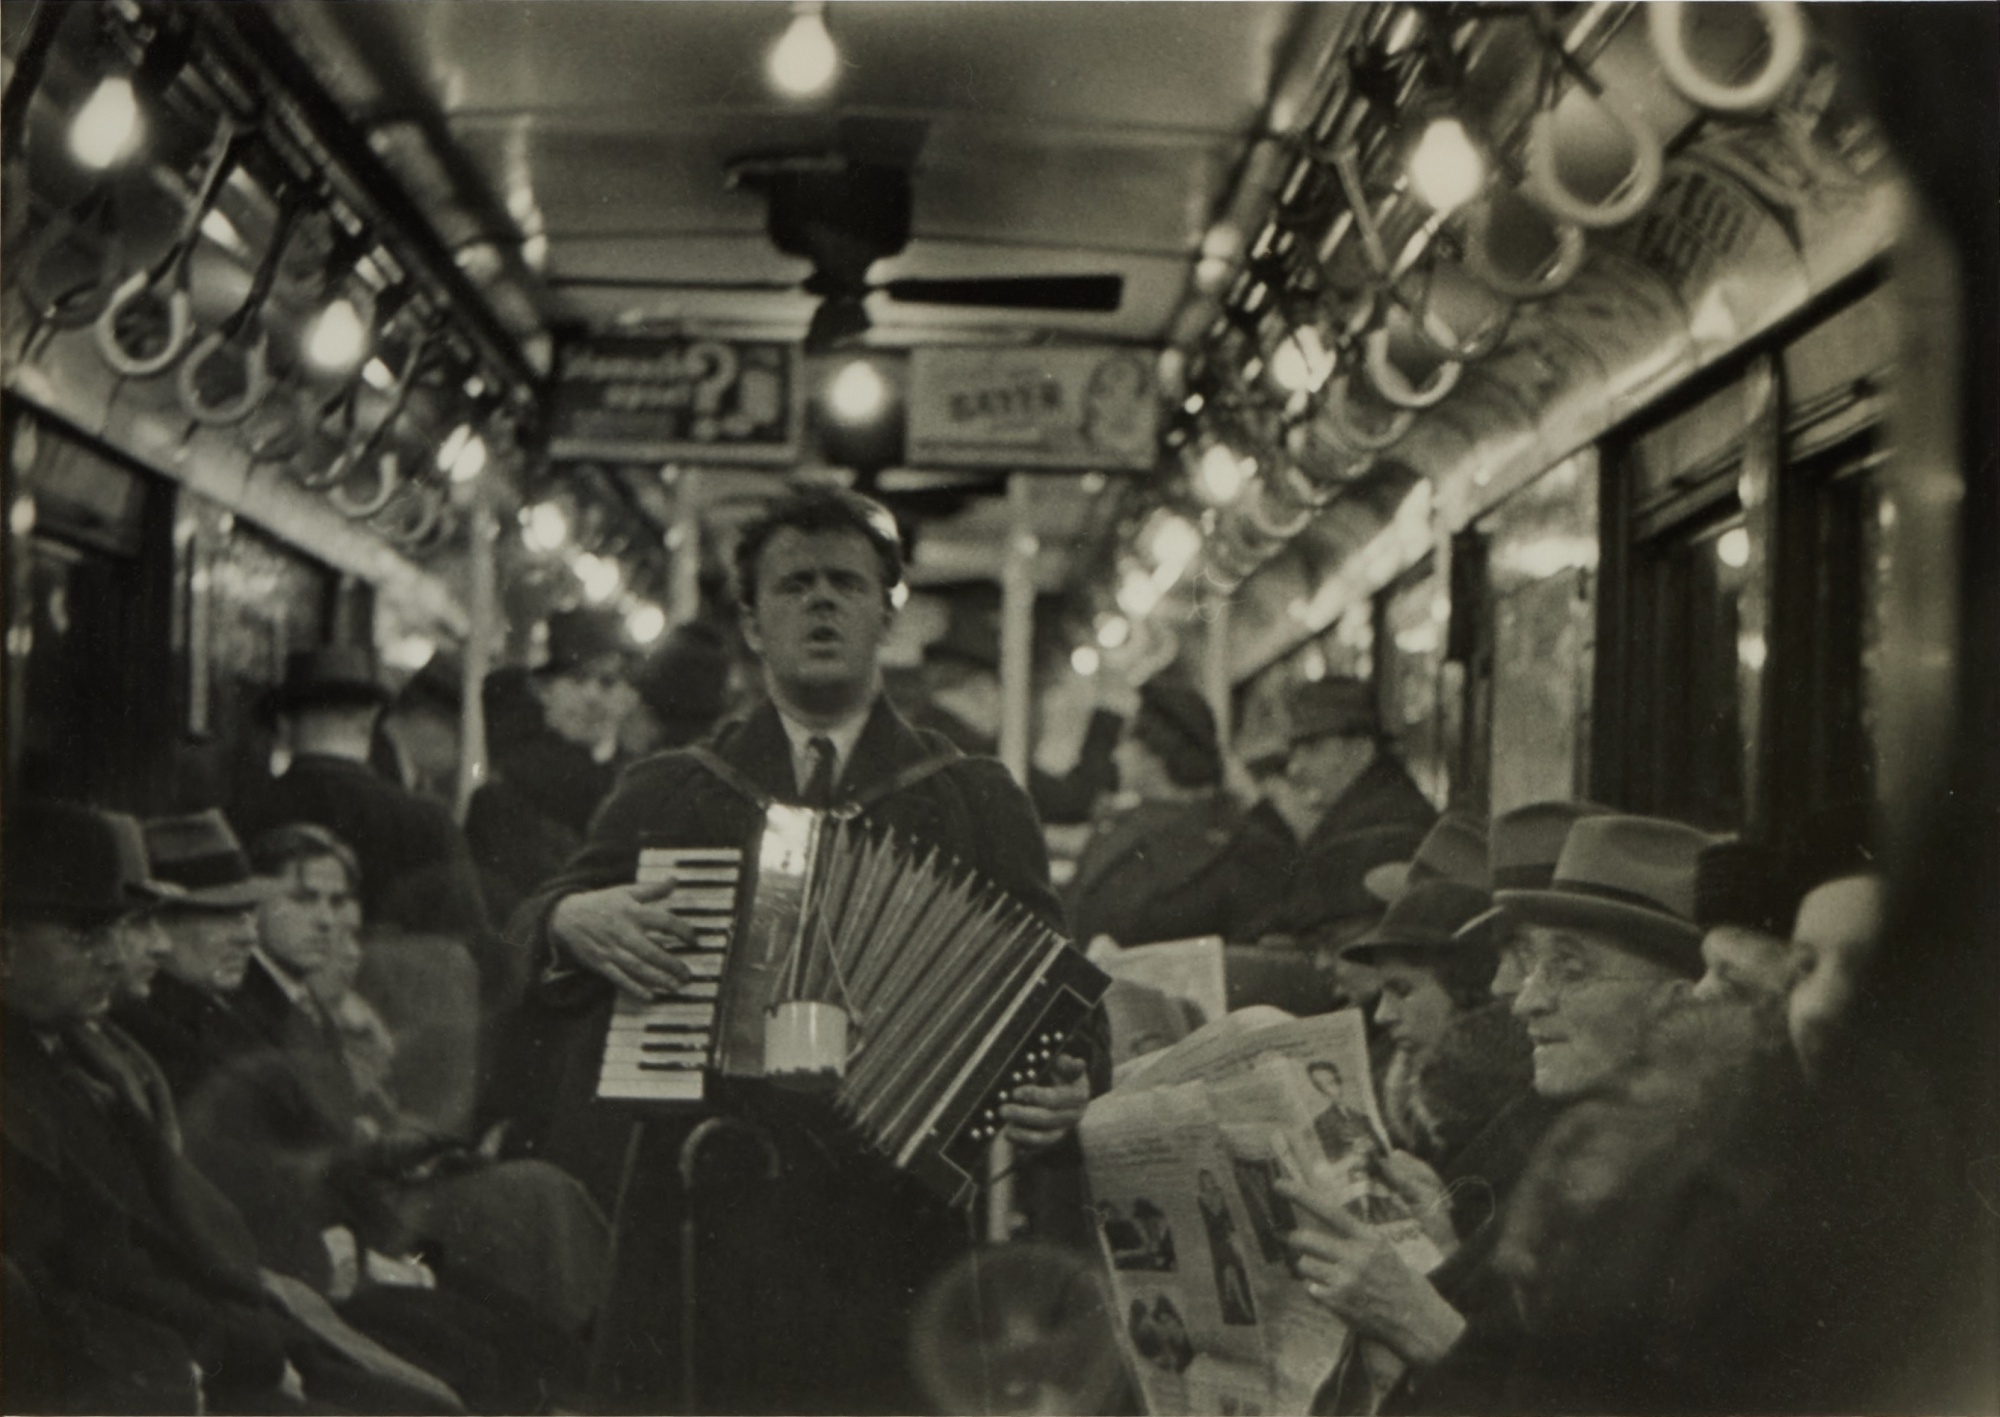 NYC Subway - Walker Evans